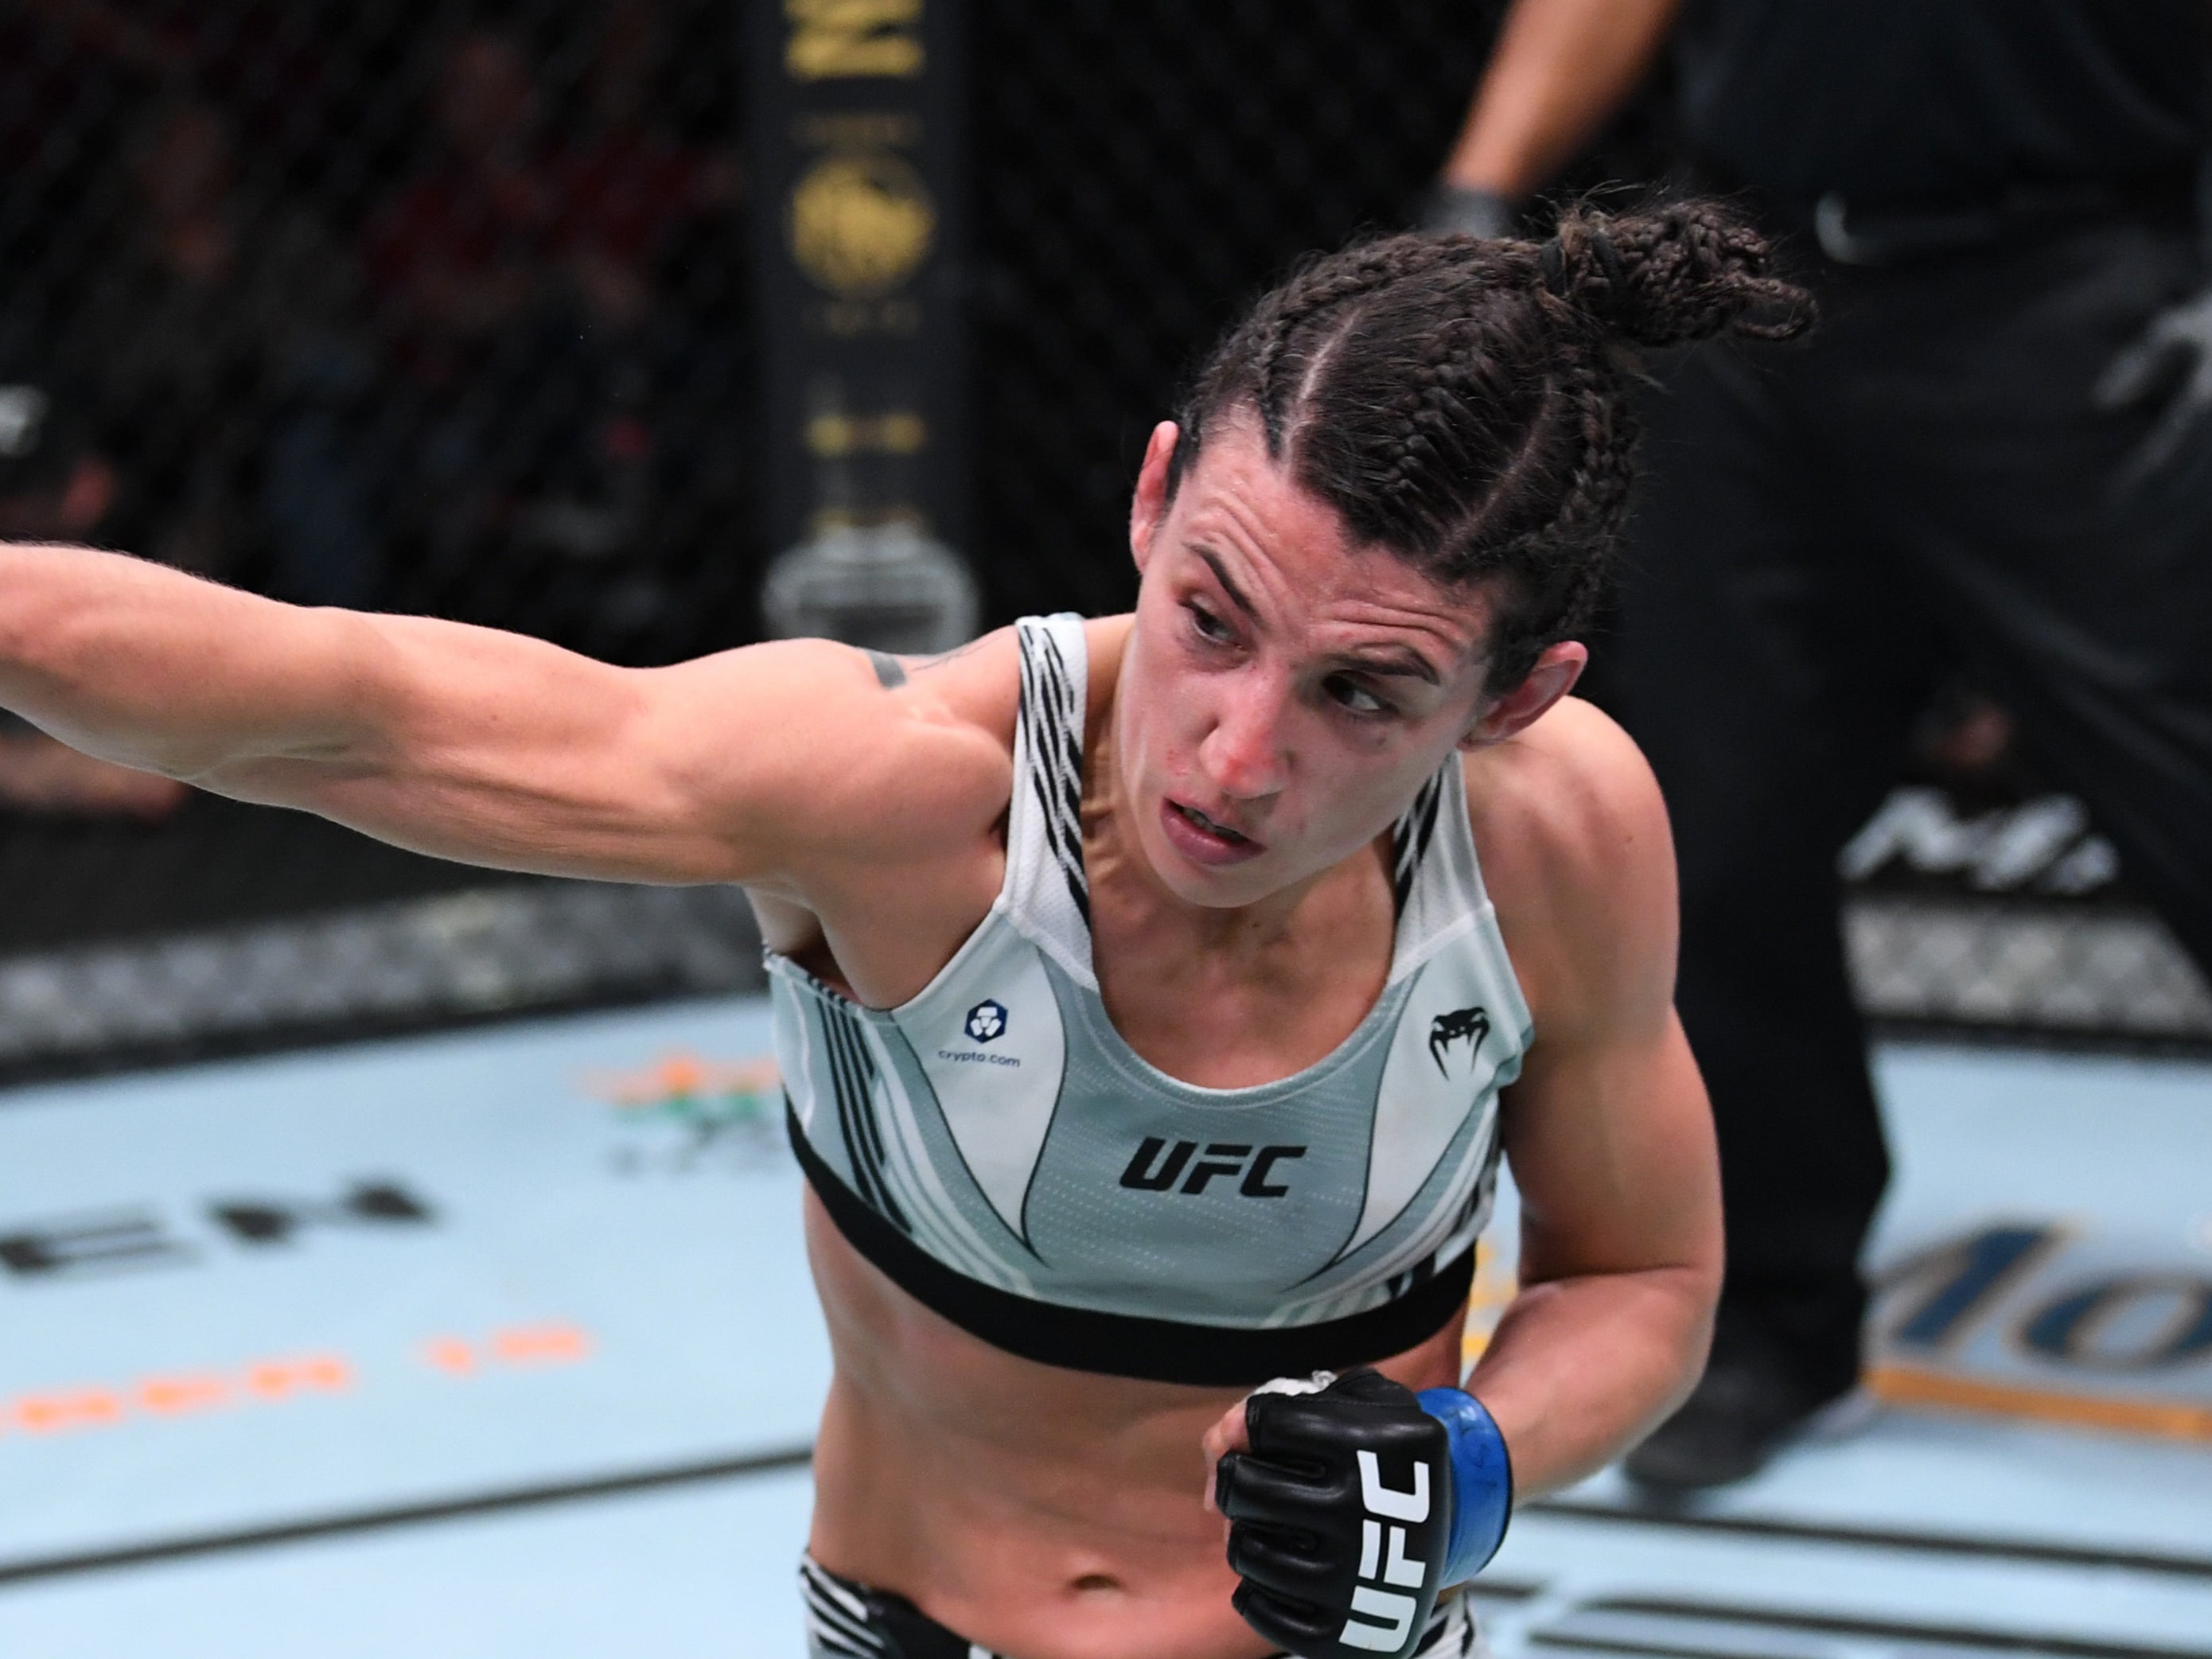 UFC women’s strawweight contender Marina Rodriguez